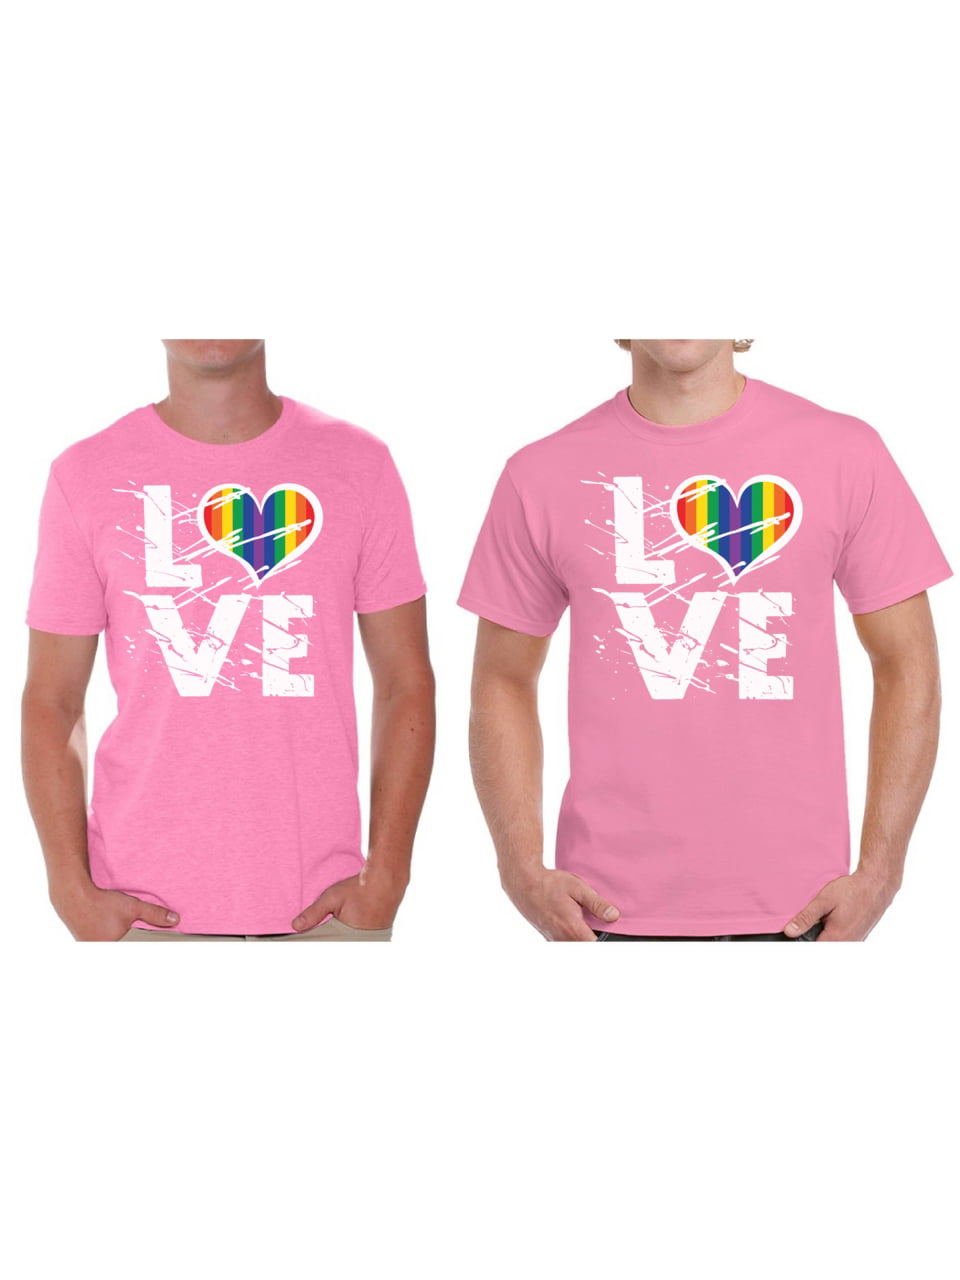 Awkward Styles - Awkward Styles Gay Couple Shirts Gay Love T-Shirts for ...